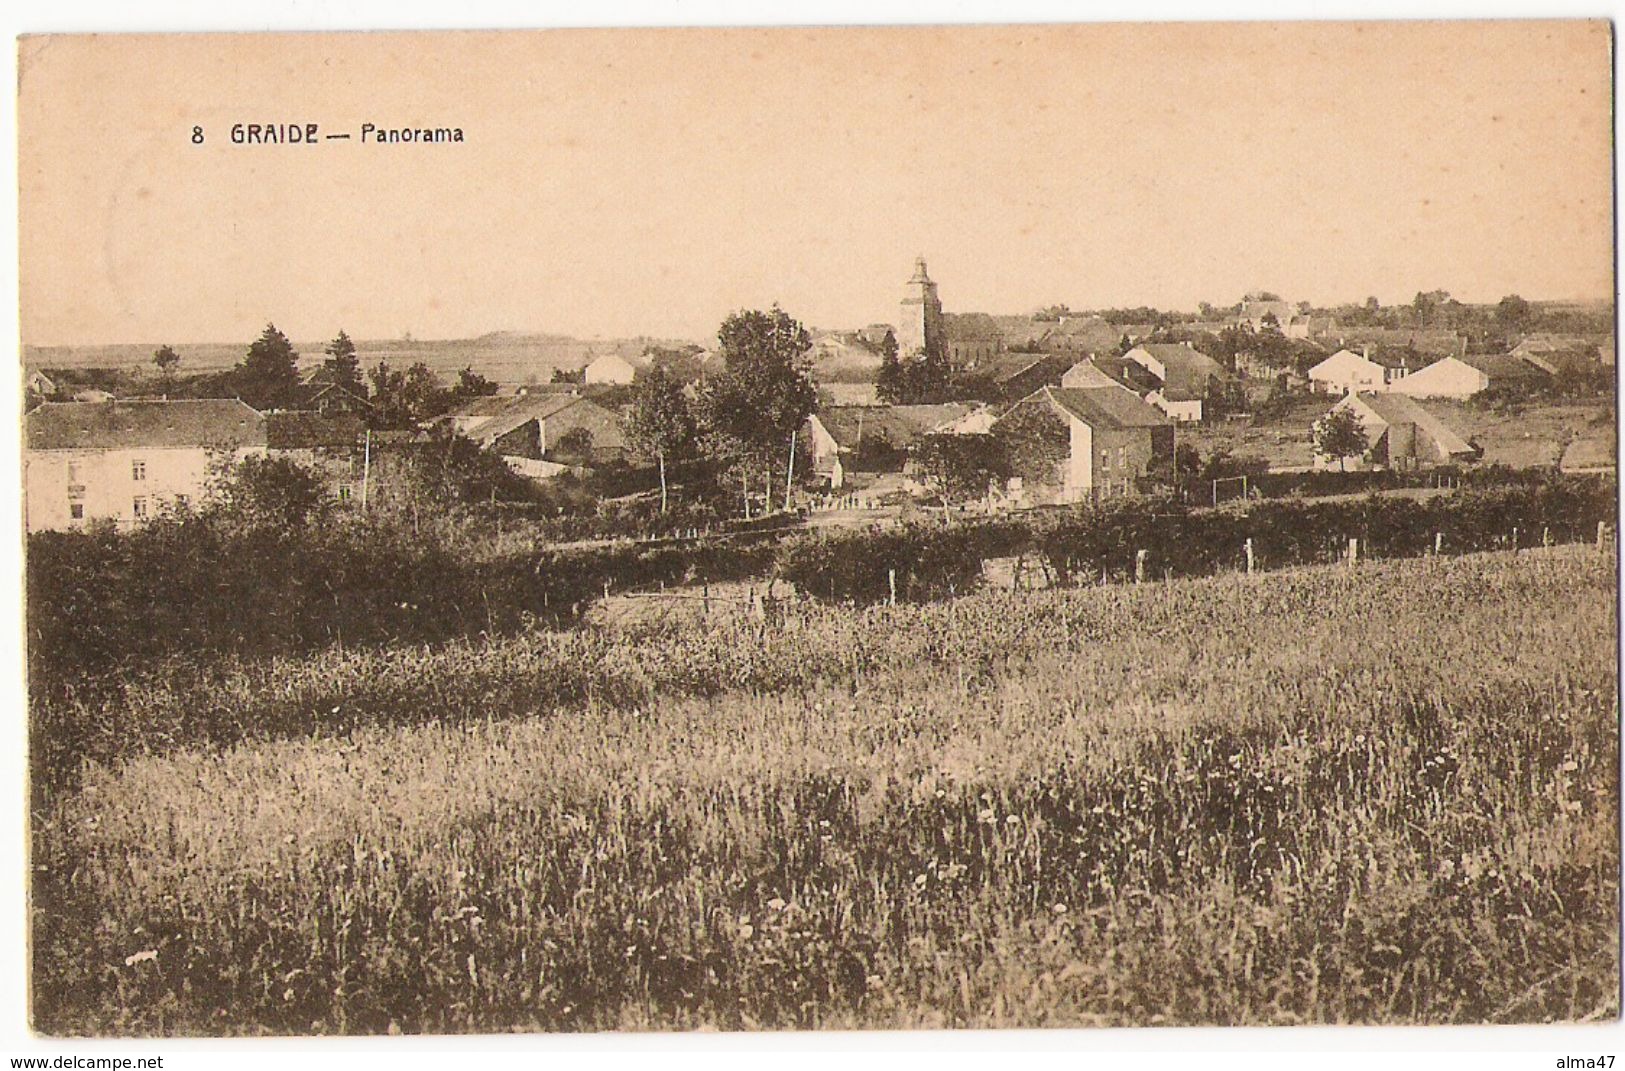 Graide - Panorama - N° 8 - Circulé 1928 - Edit Compère Goffin - Bievre